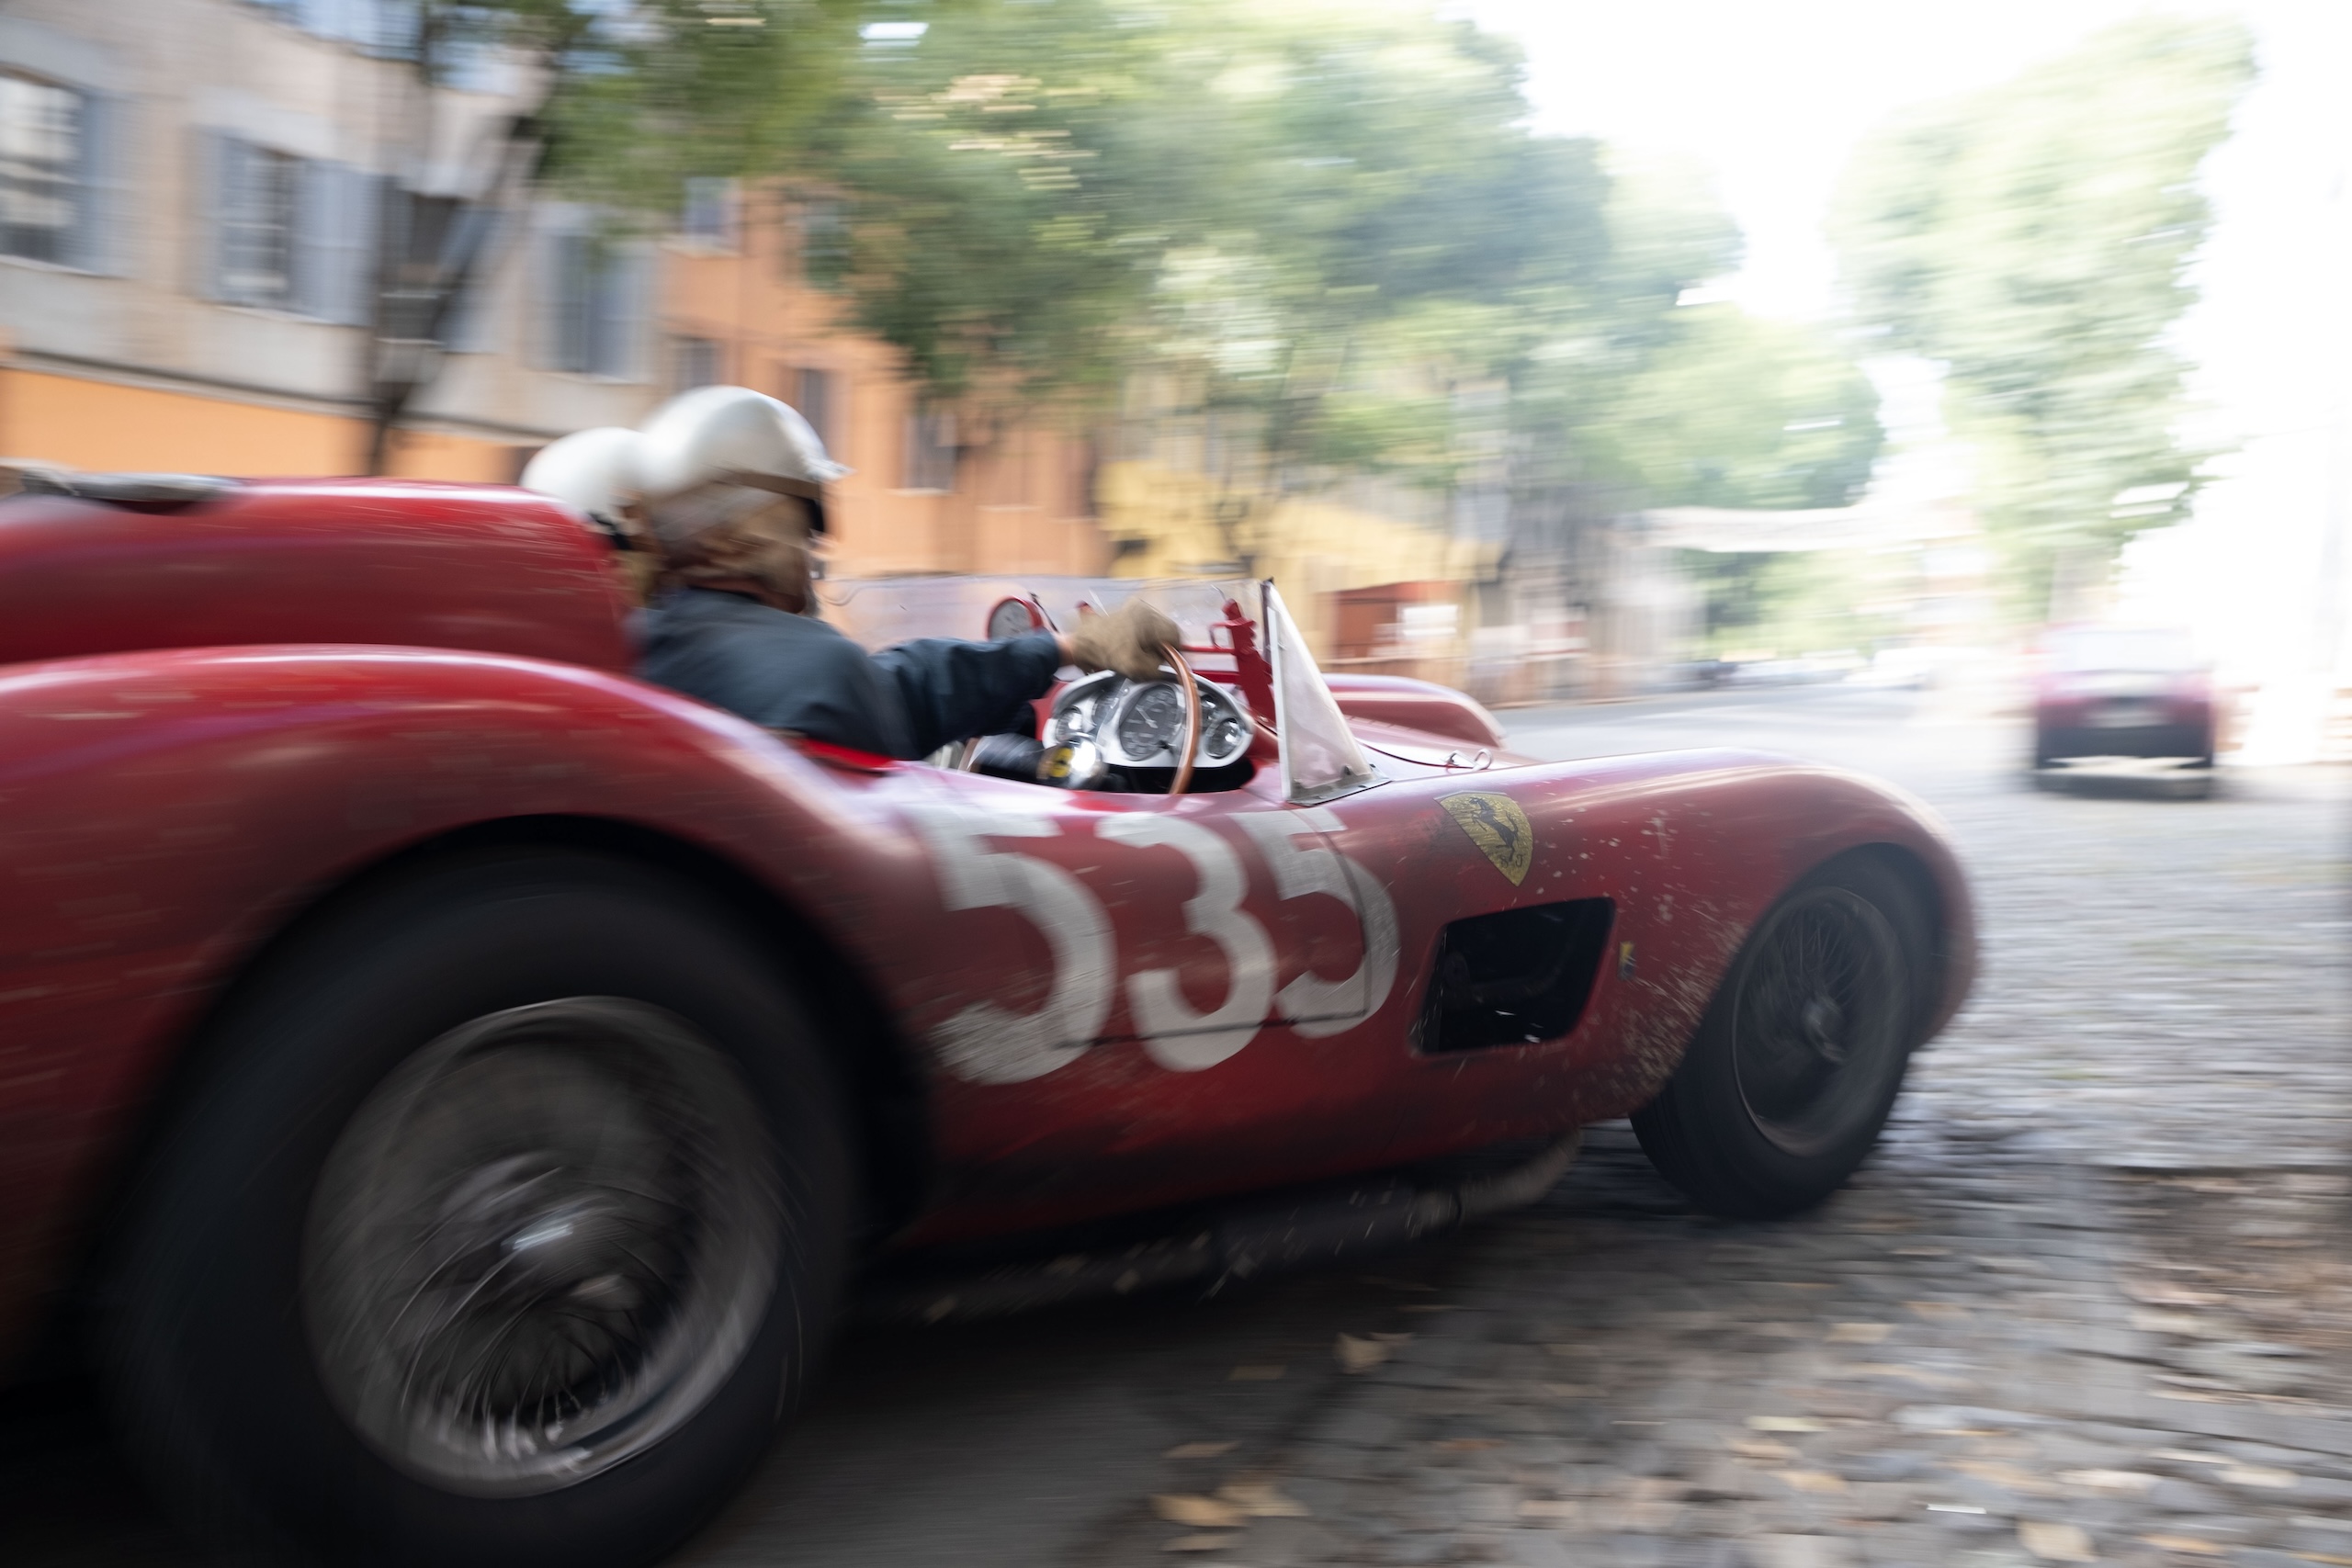 Stunt director Robert Nagle made Ferrari feel real, alive